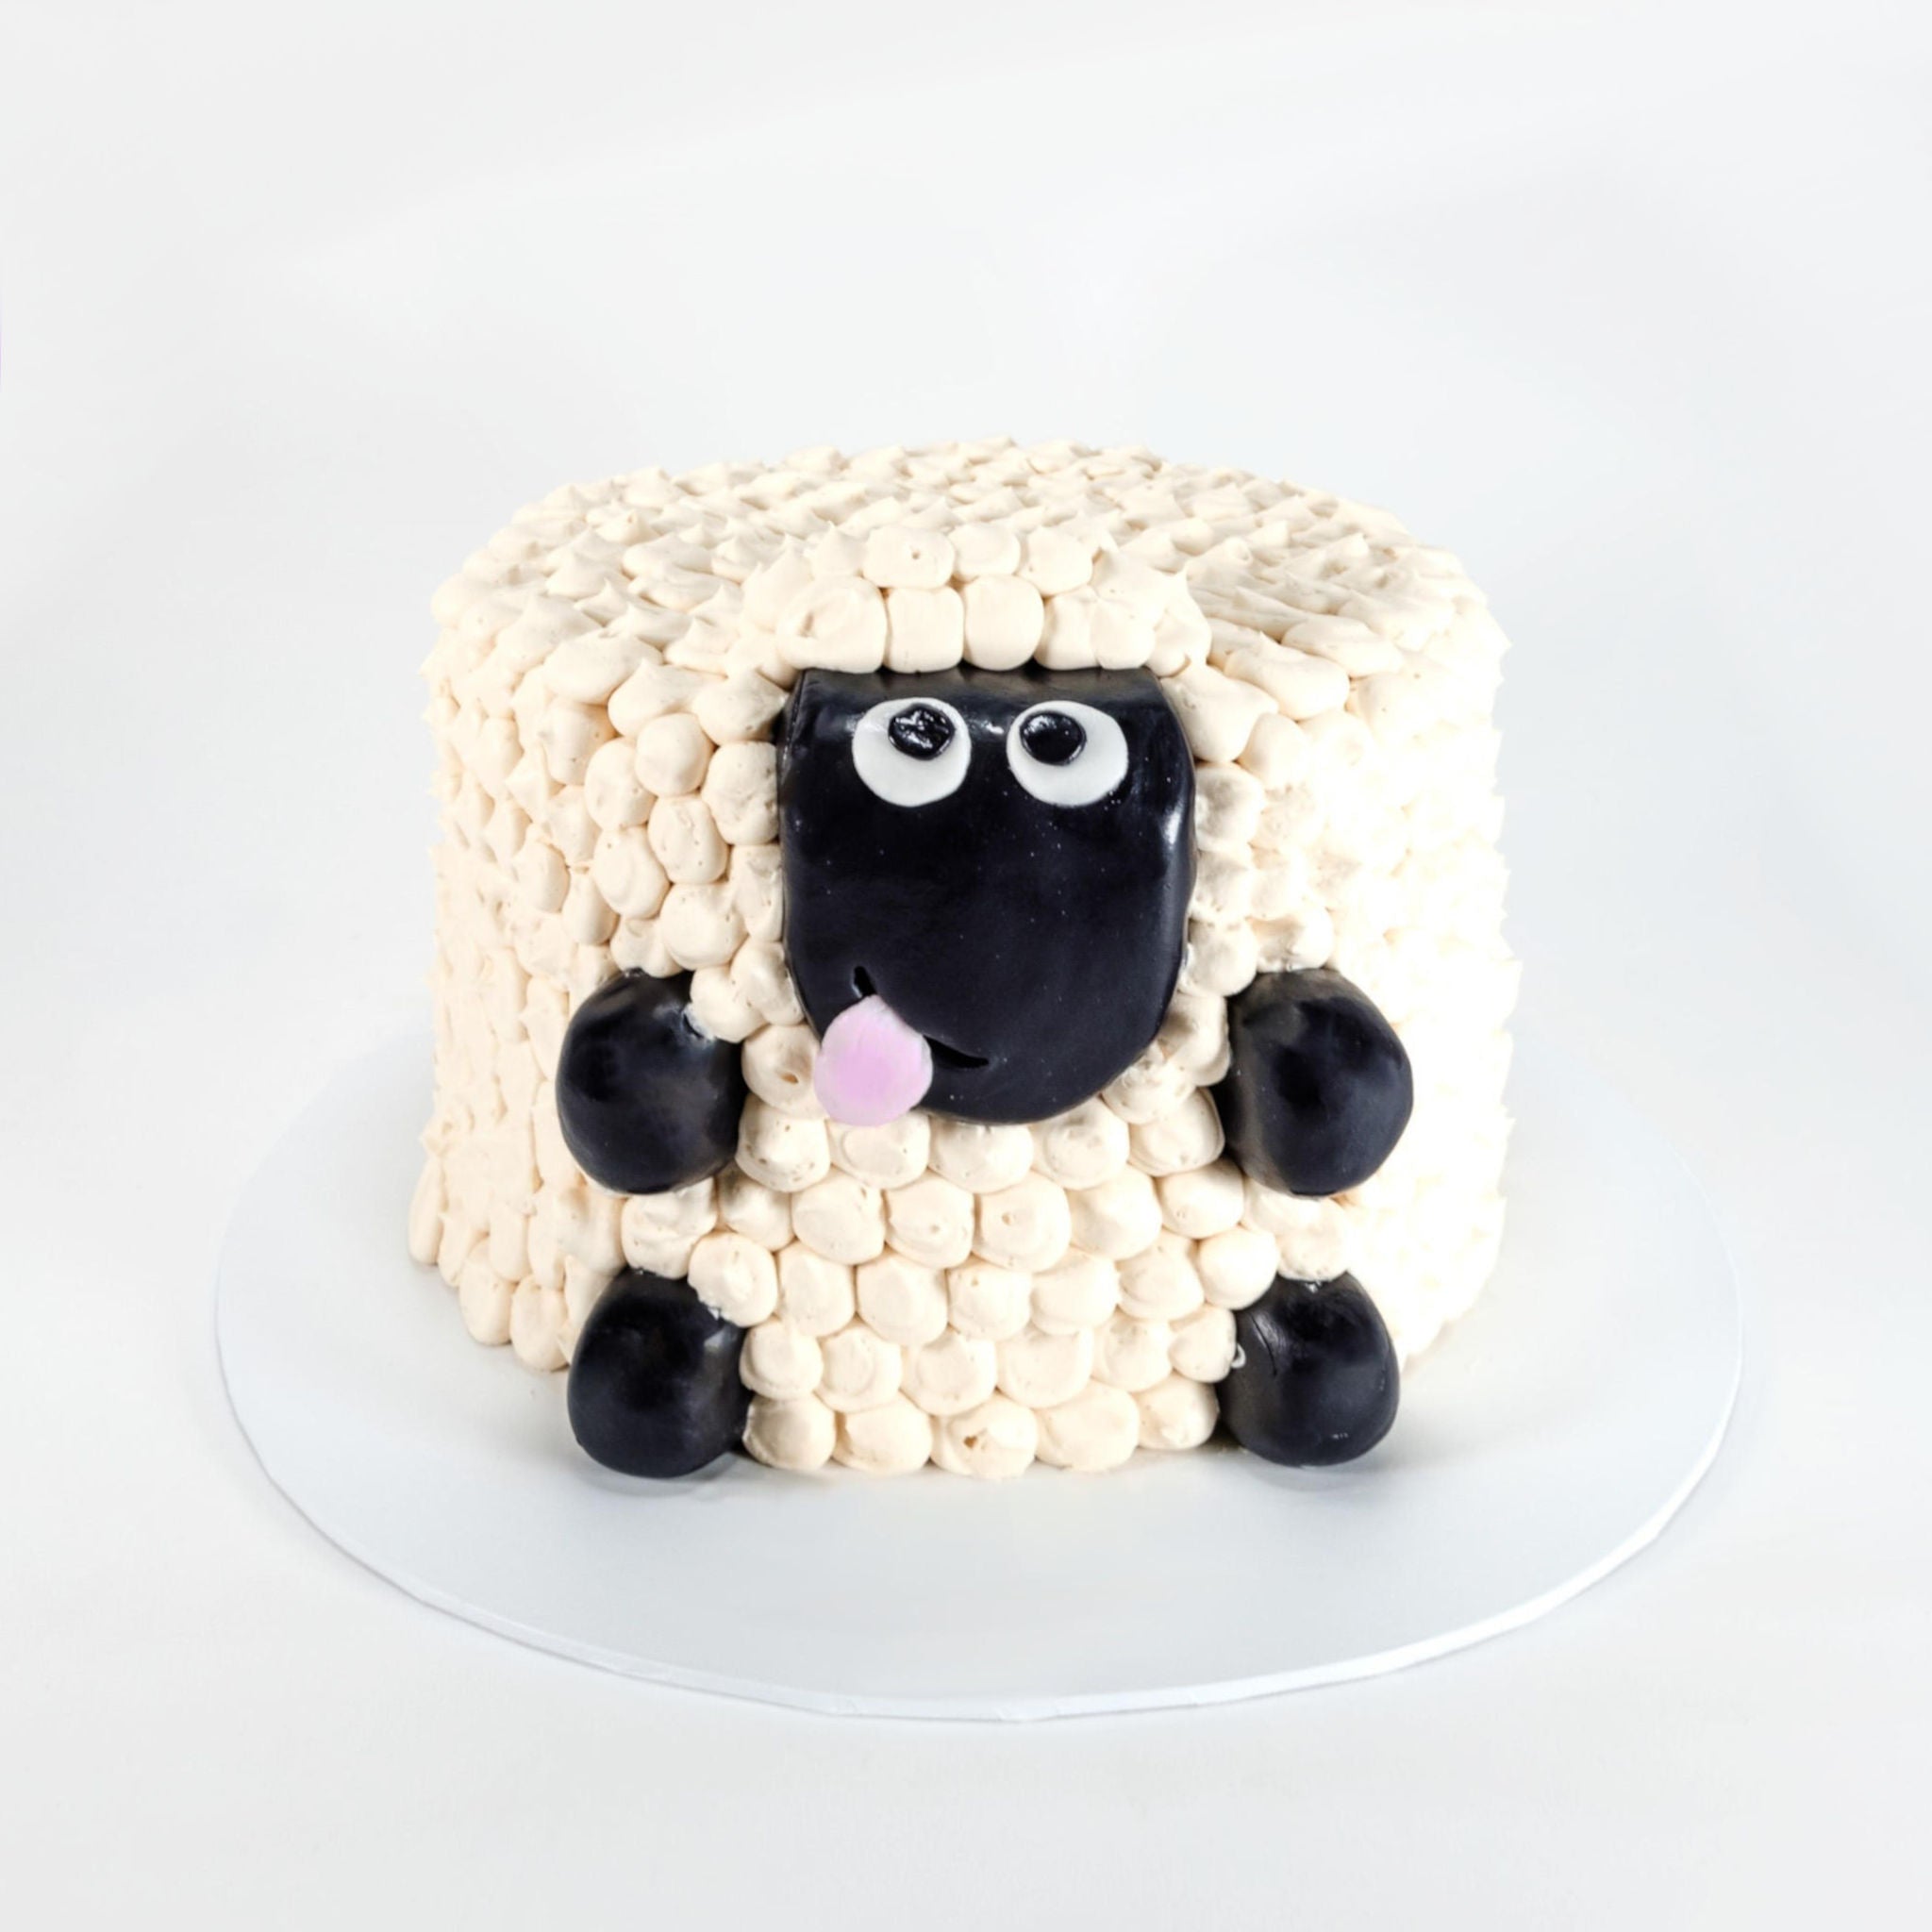 Customized Sheep Cake – Black & Brown Bakers